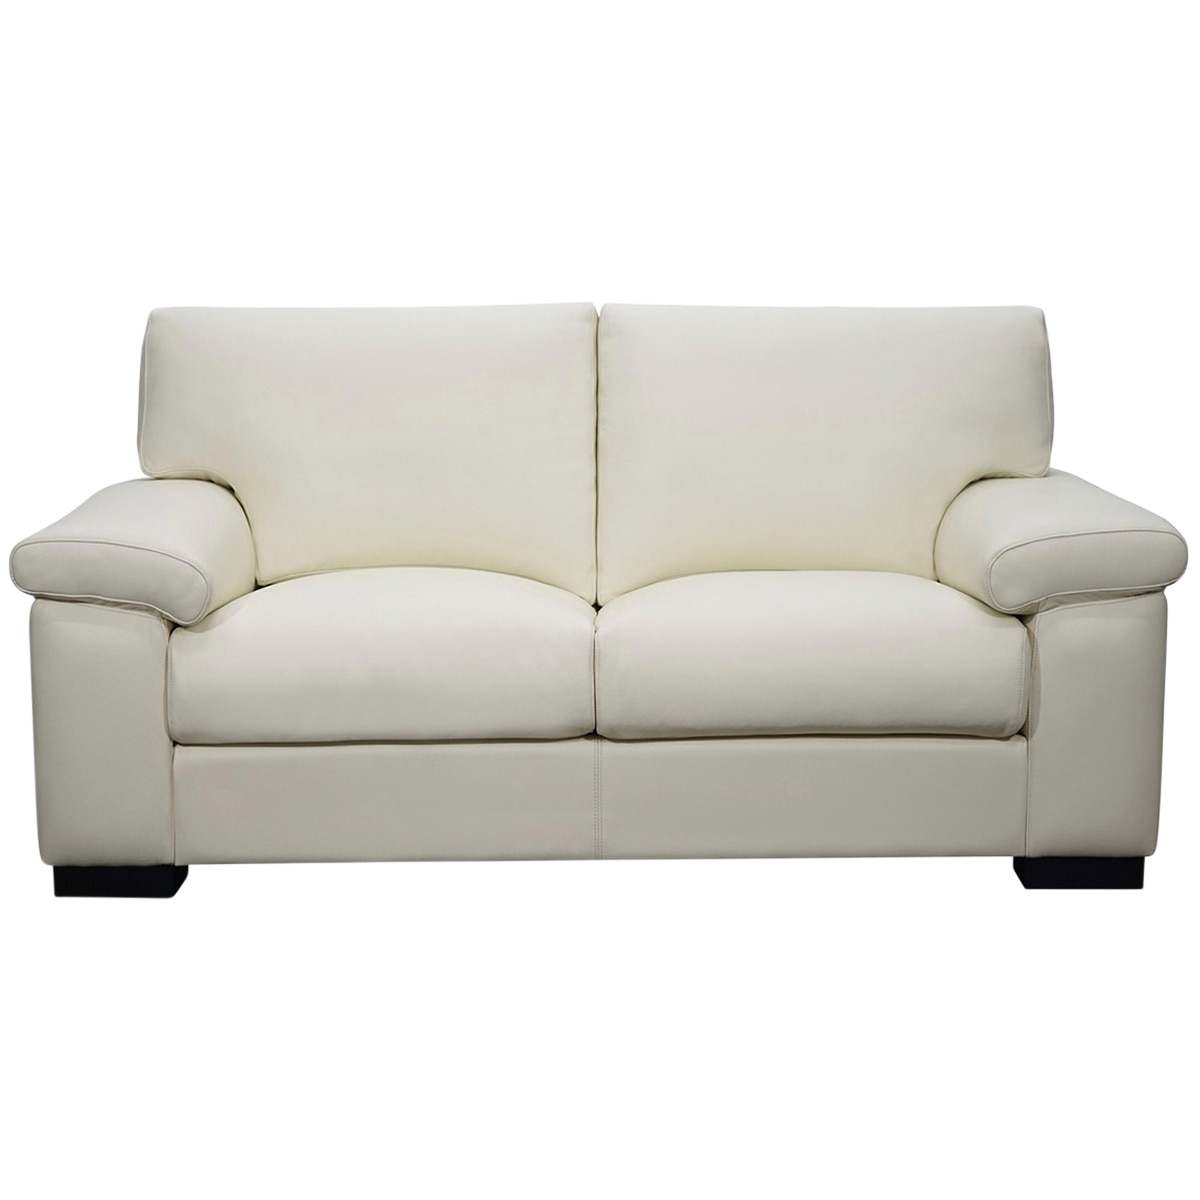 Moran Thomas 2.5-Seater Leather Sofa | Costco Australia